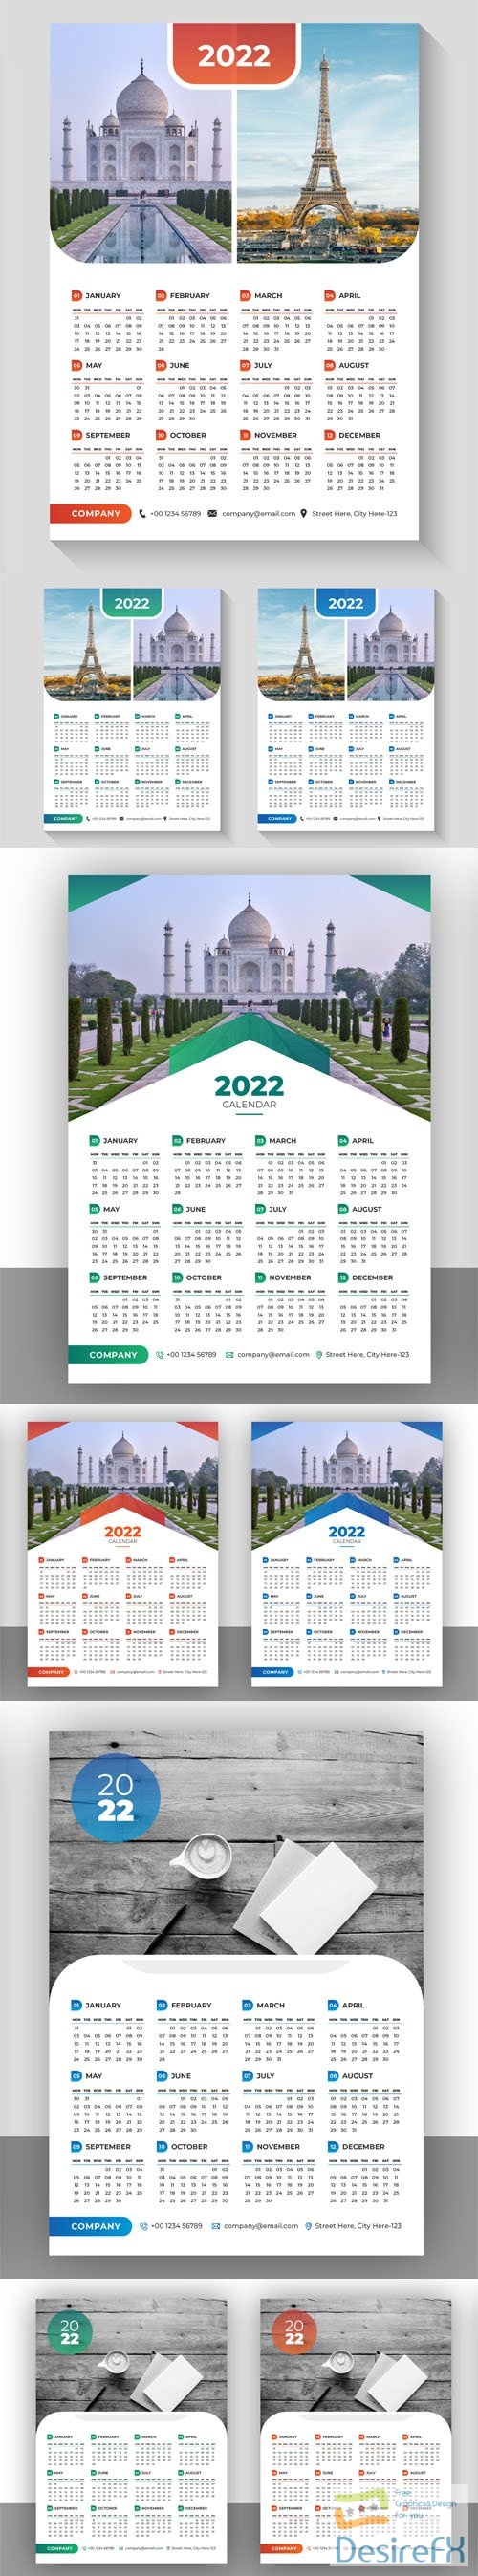 18 Calendar 2022 Vector Templates Vol.2